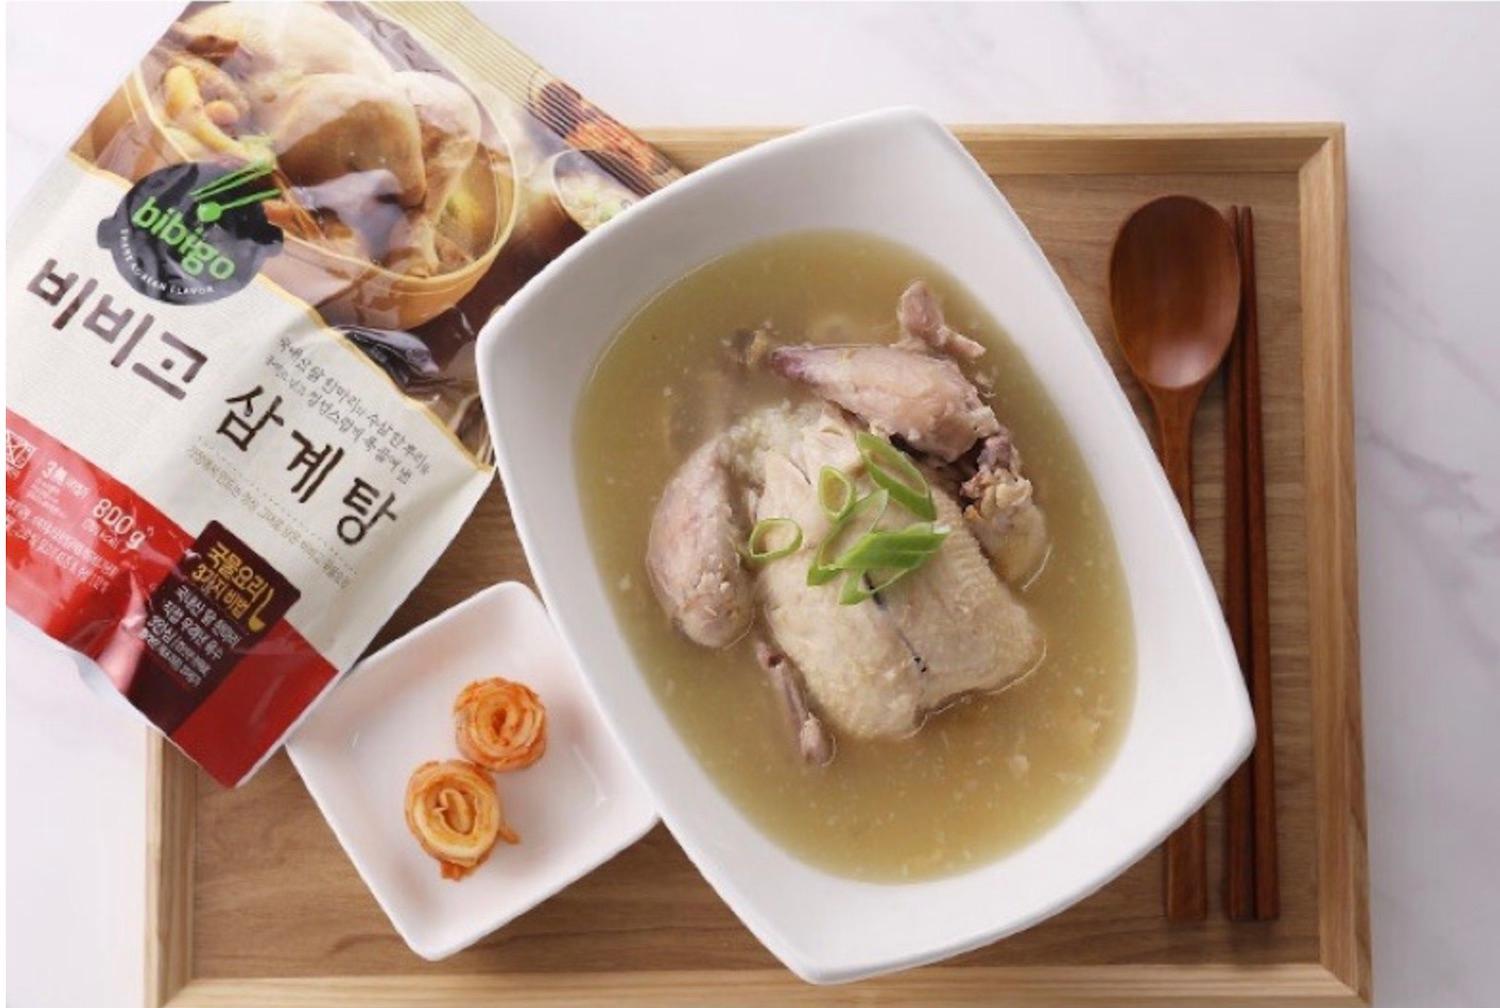 Korean brand bibigo's samgyetang prepared on a tray with kimchi and cutlery 